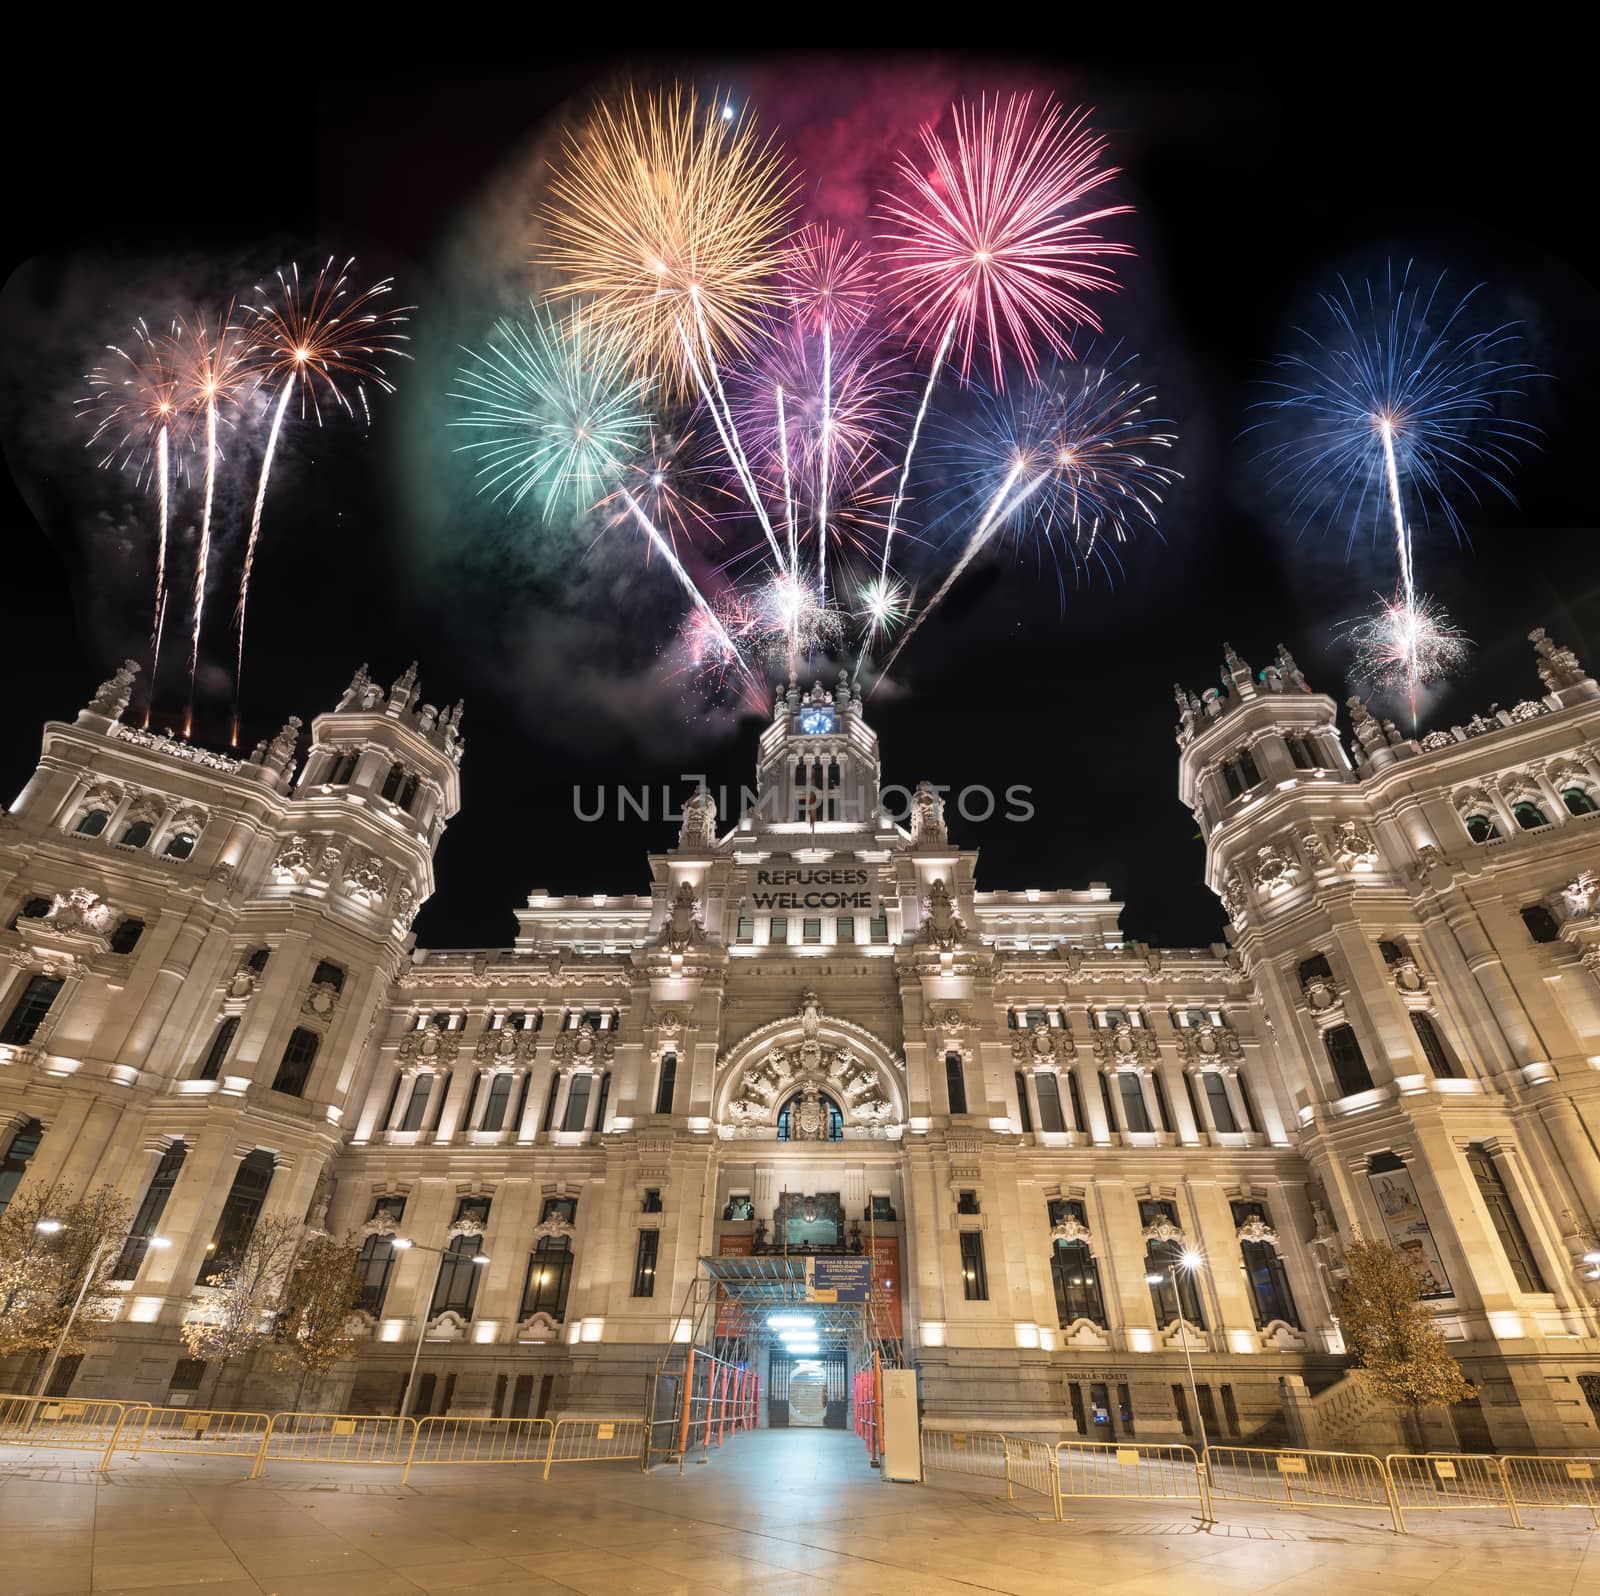 Cibeles Palace night scene fireworks display celebration, (Palacio de Cibeles) is the City Hall of Madrid. by HERRAEZ